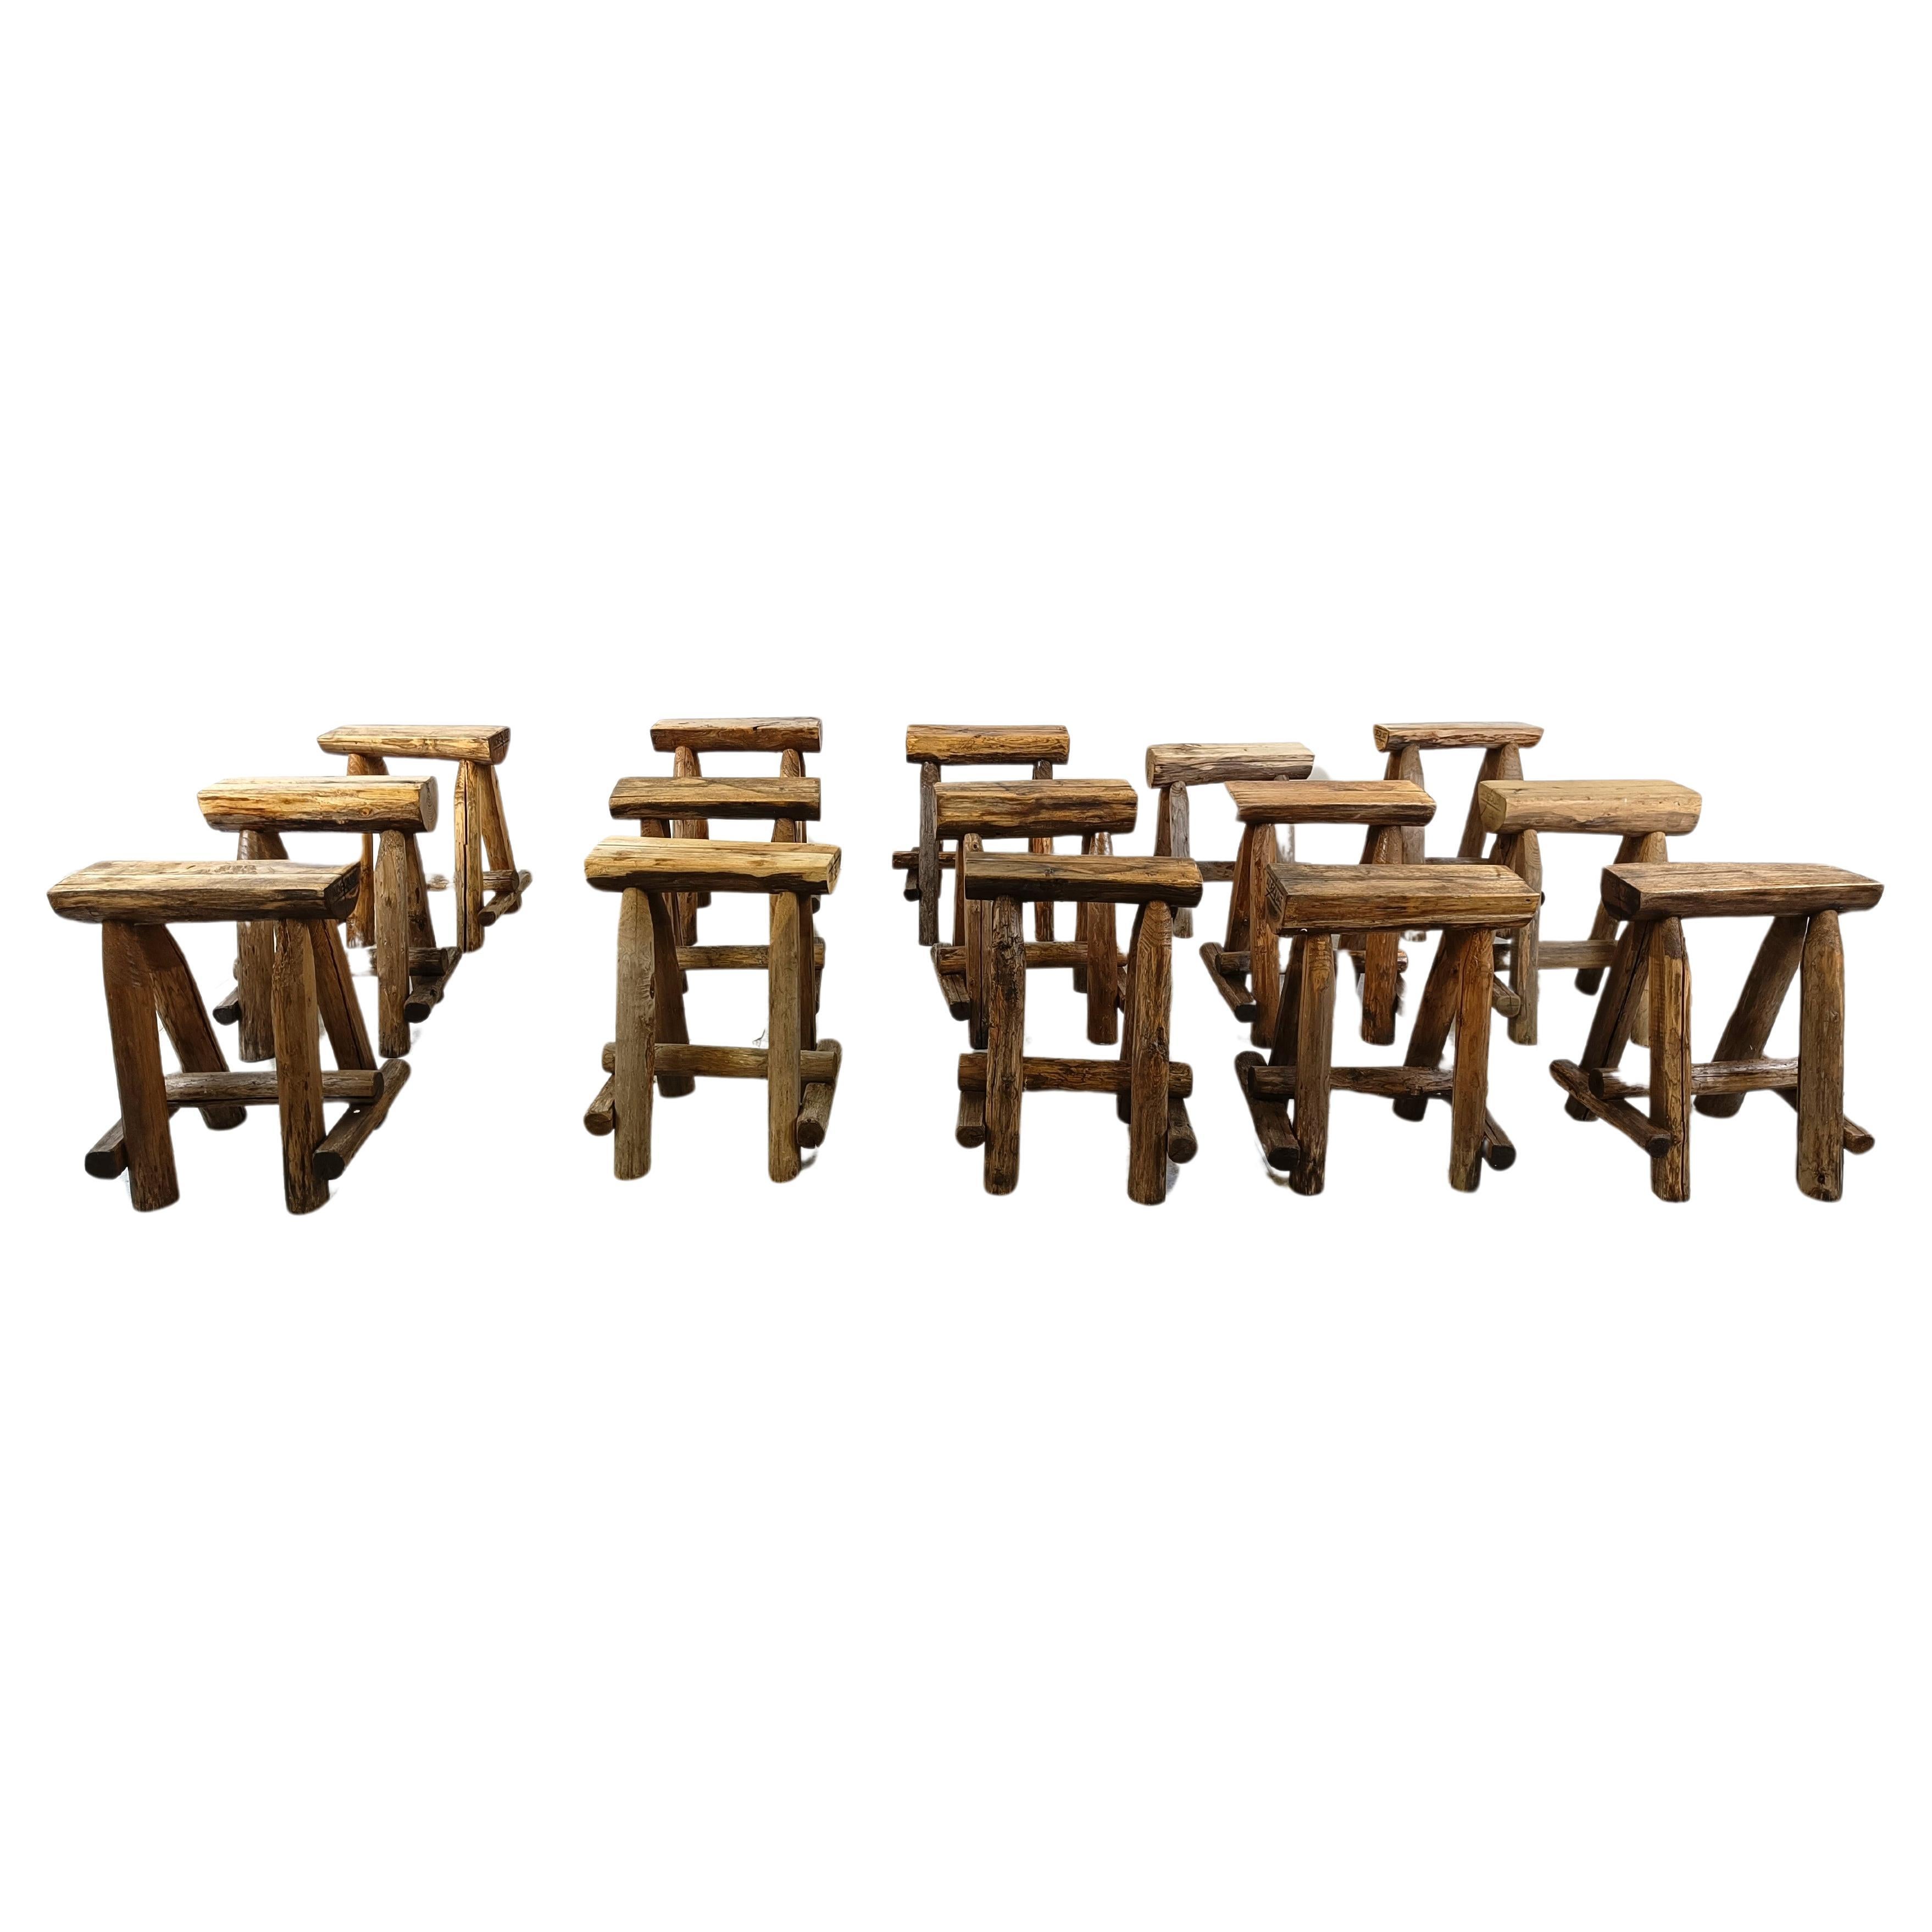 Vintage wooden stools, 1970s 